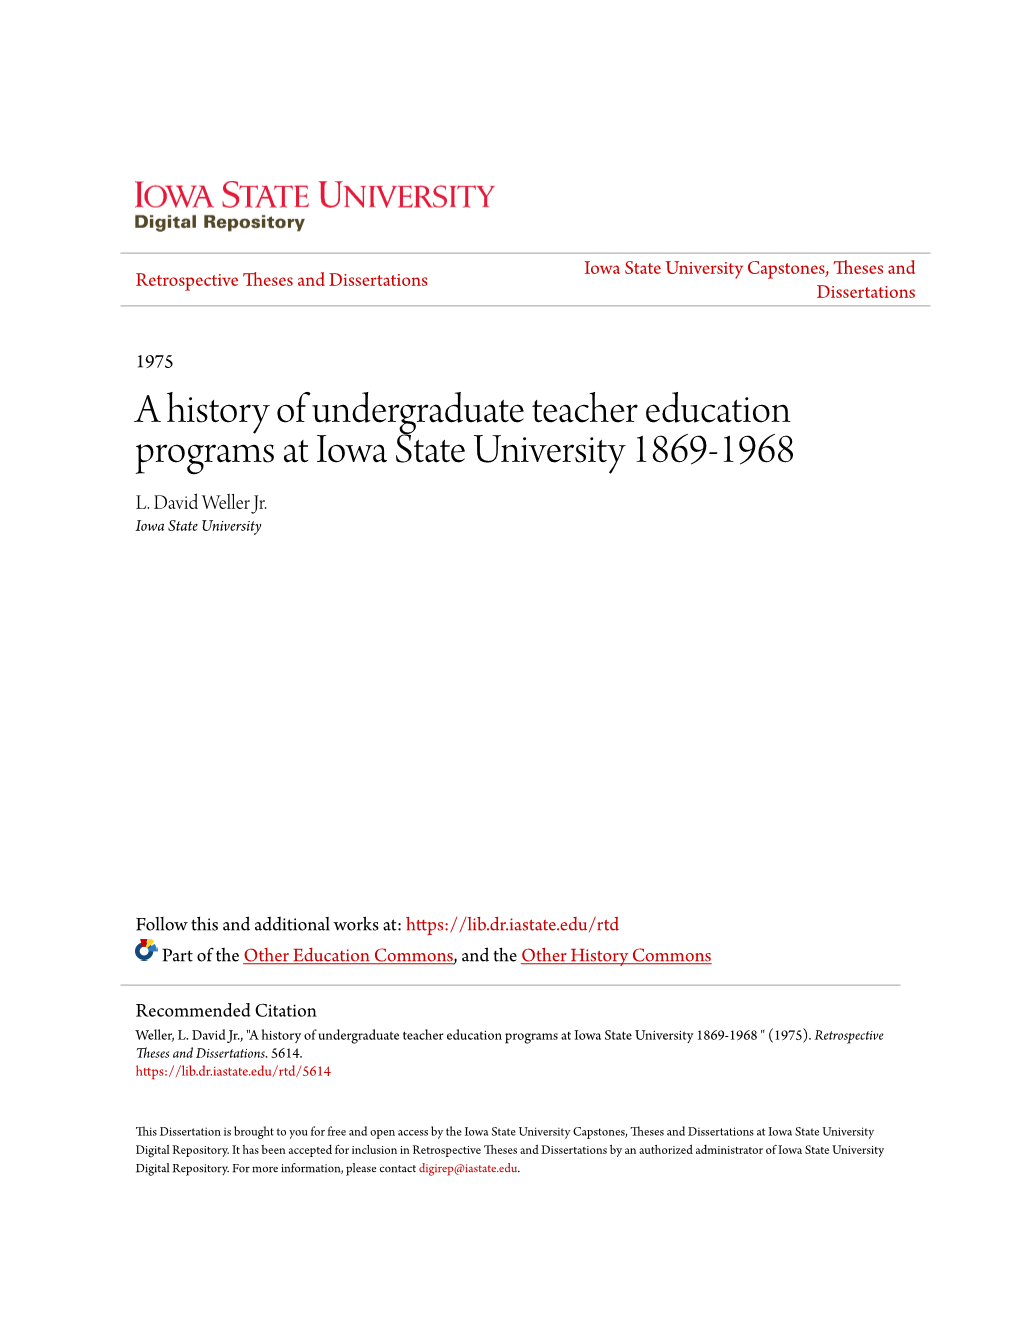 A History of Undergraduate Teacher Education Programs at Iowa State University 1869-1968 L